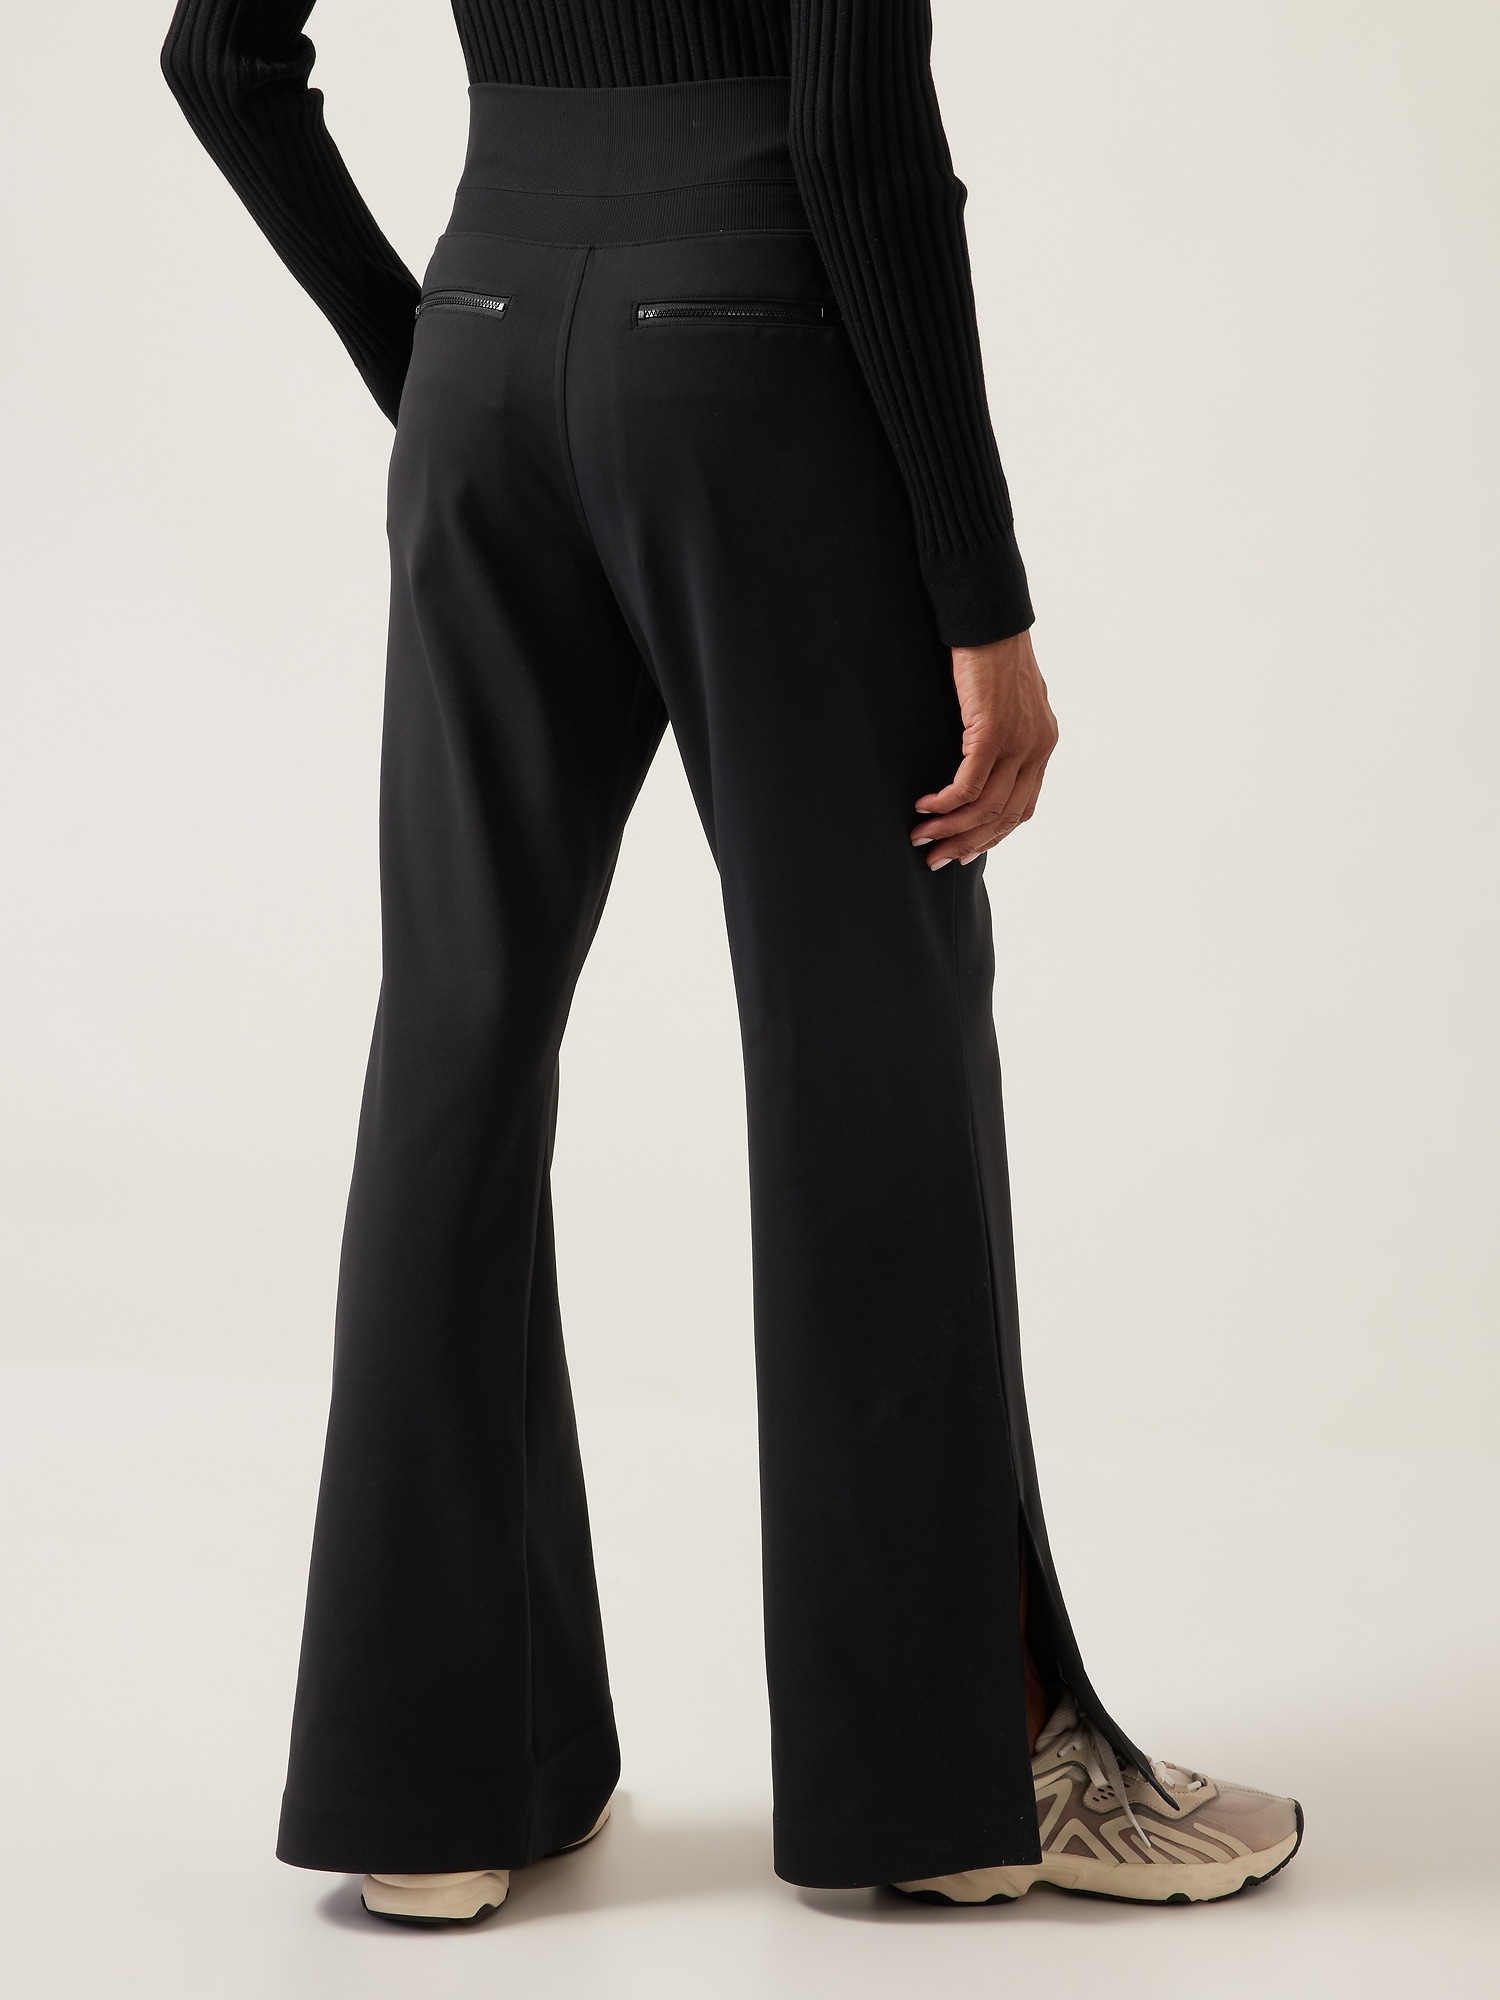 Antime 2021 Ruched Loose Flare Pants Streetwear Autumn Khaki Black